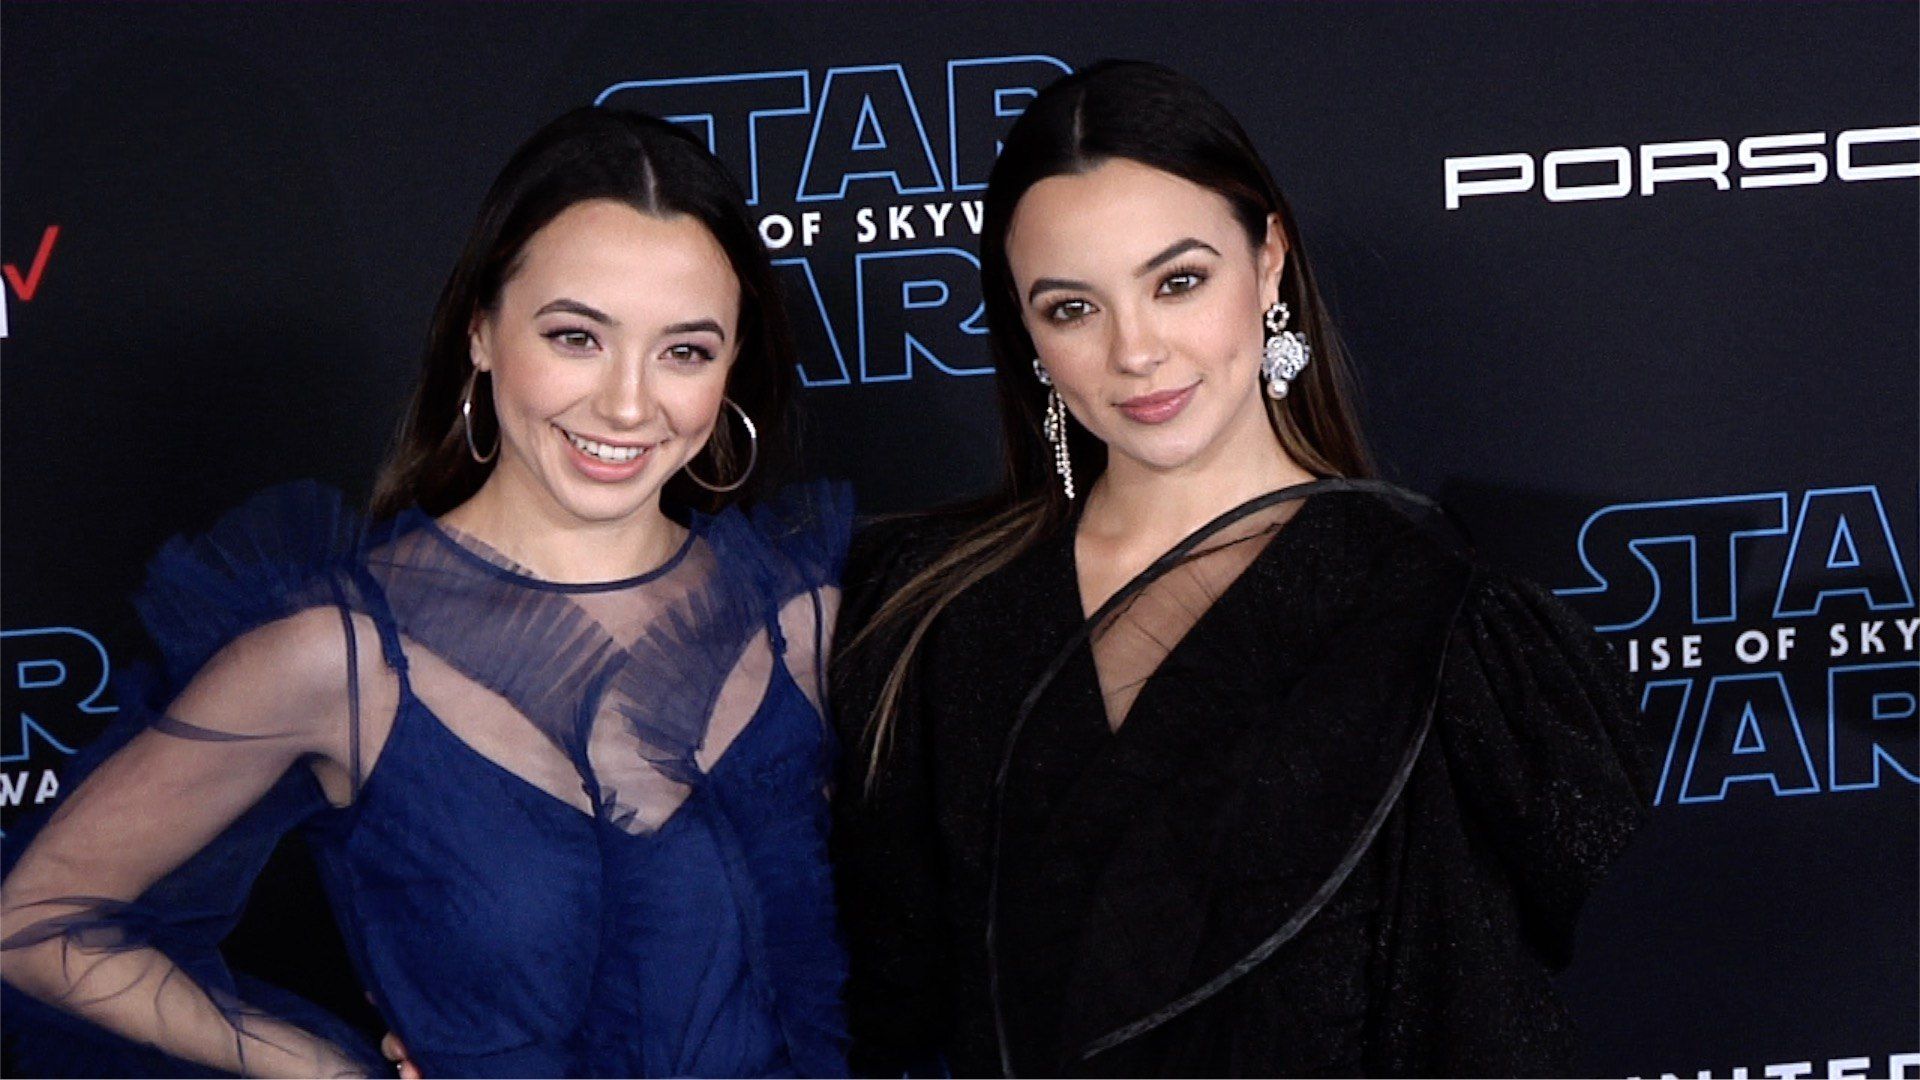 Merrell Twins “Star Wars: The Rise of Skywalker” World Premiere